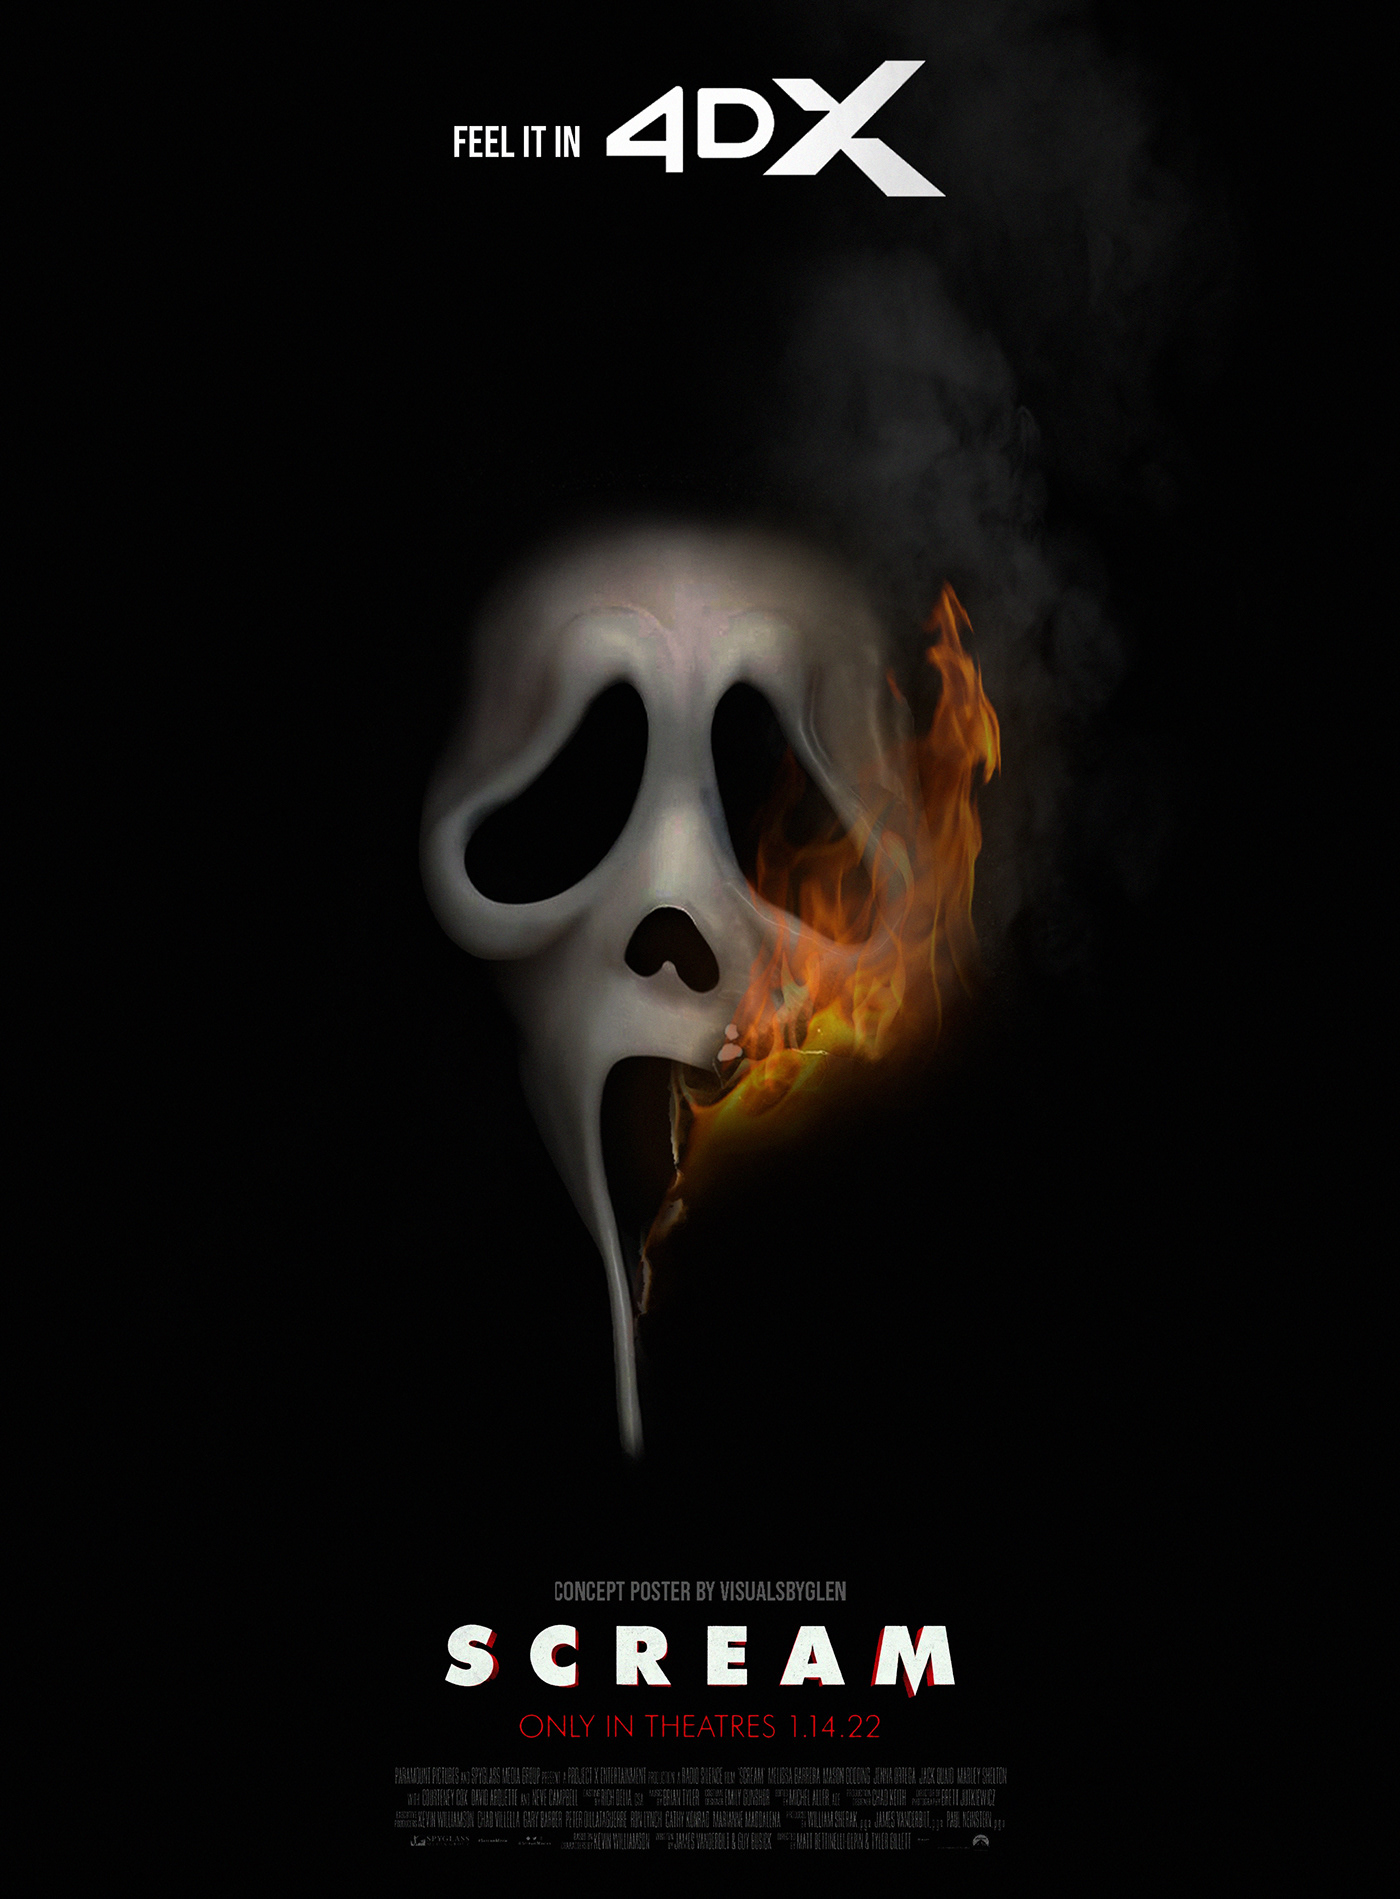 ads Advertising  cinema 4d horror movie Poster Design scream wes craven